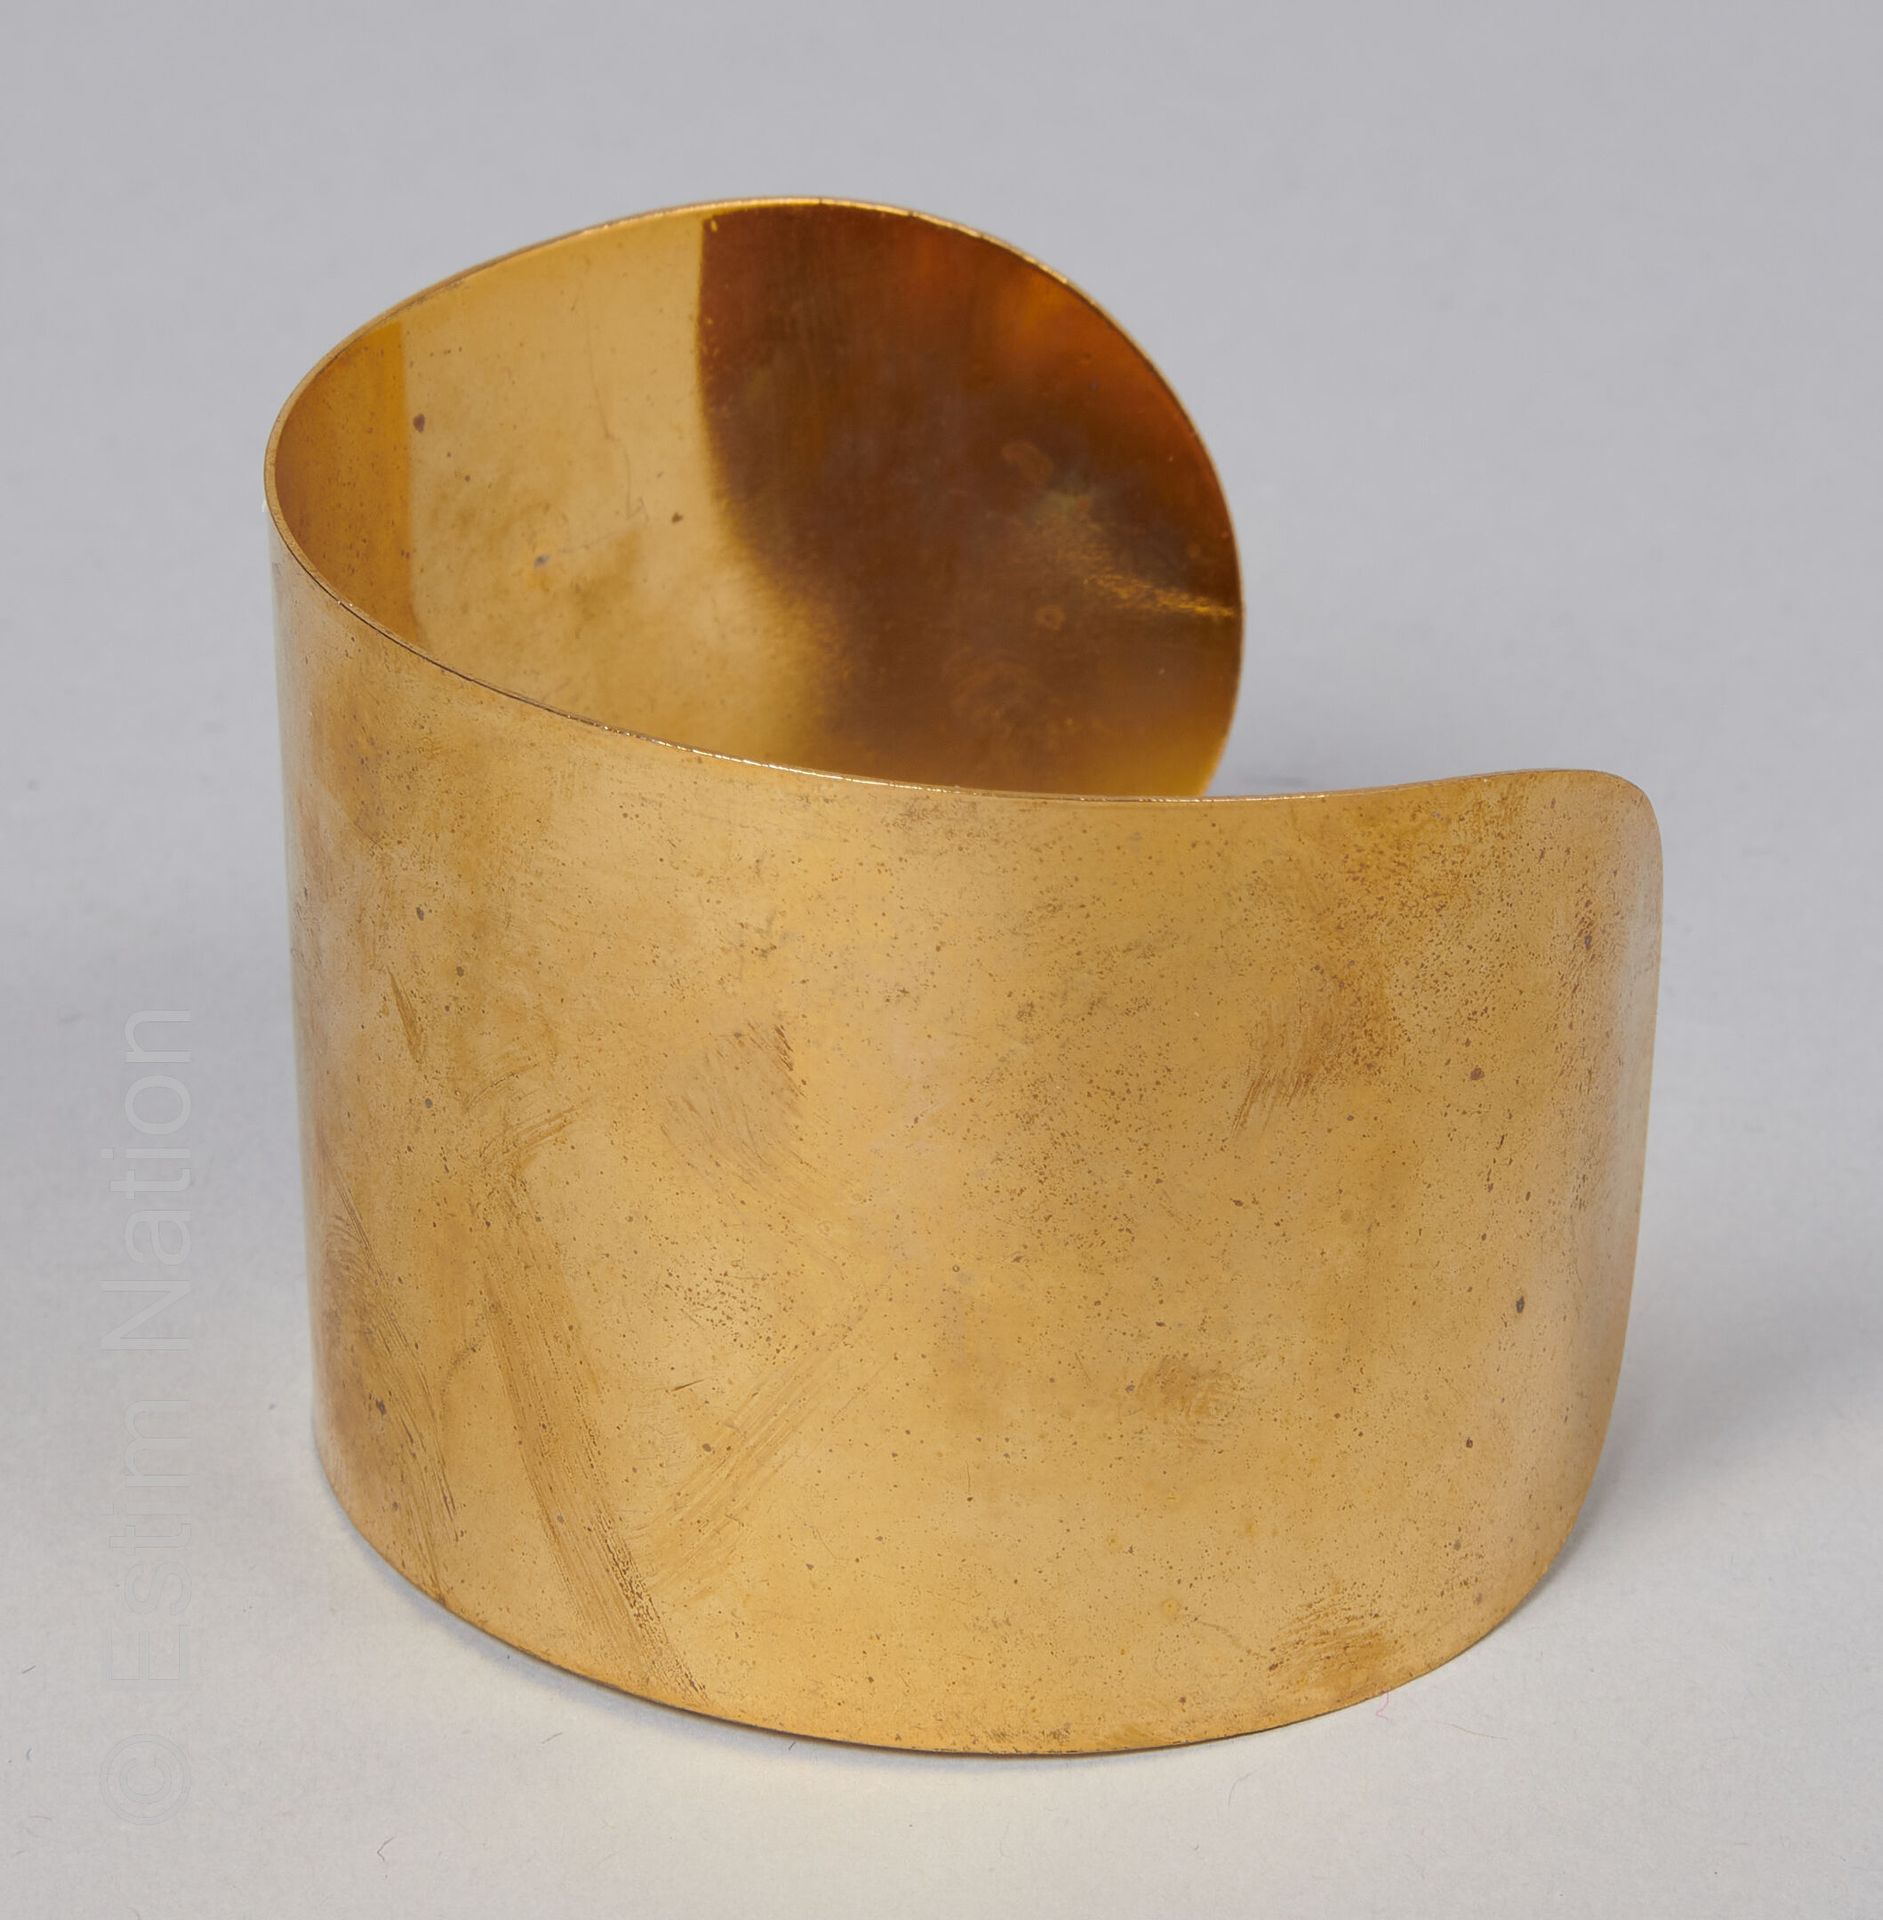 MANCHETTE CUIVRE Copper cuff bracelet. 
Width: 4.5 cm 
(slight oxidation)